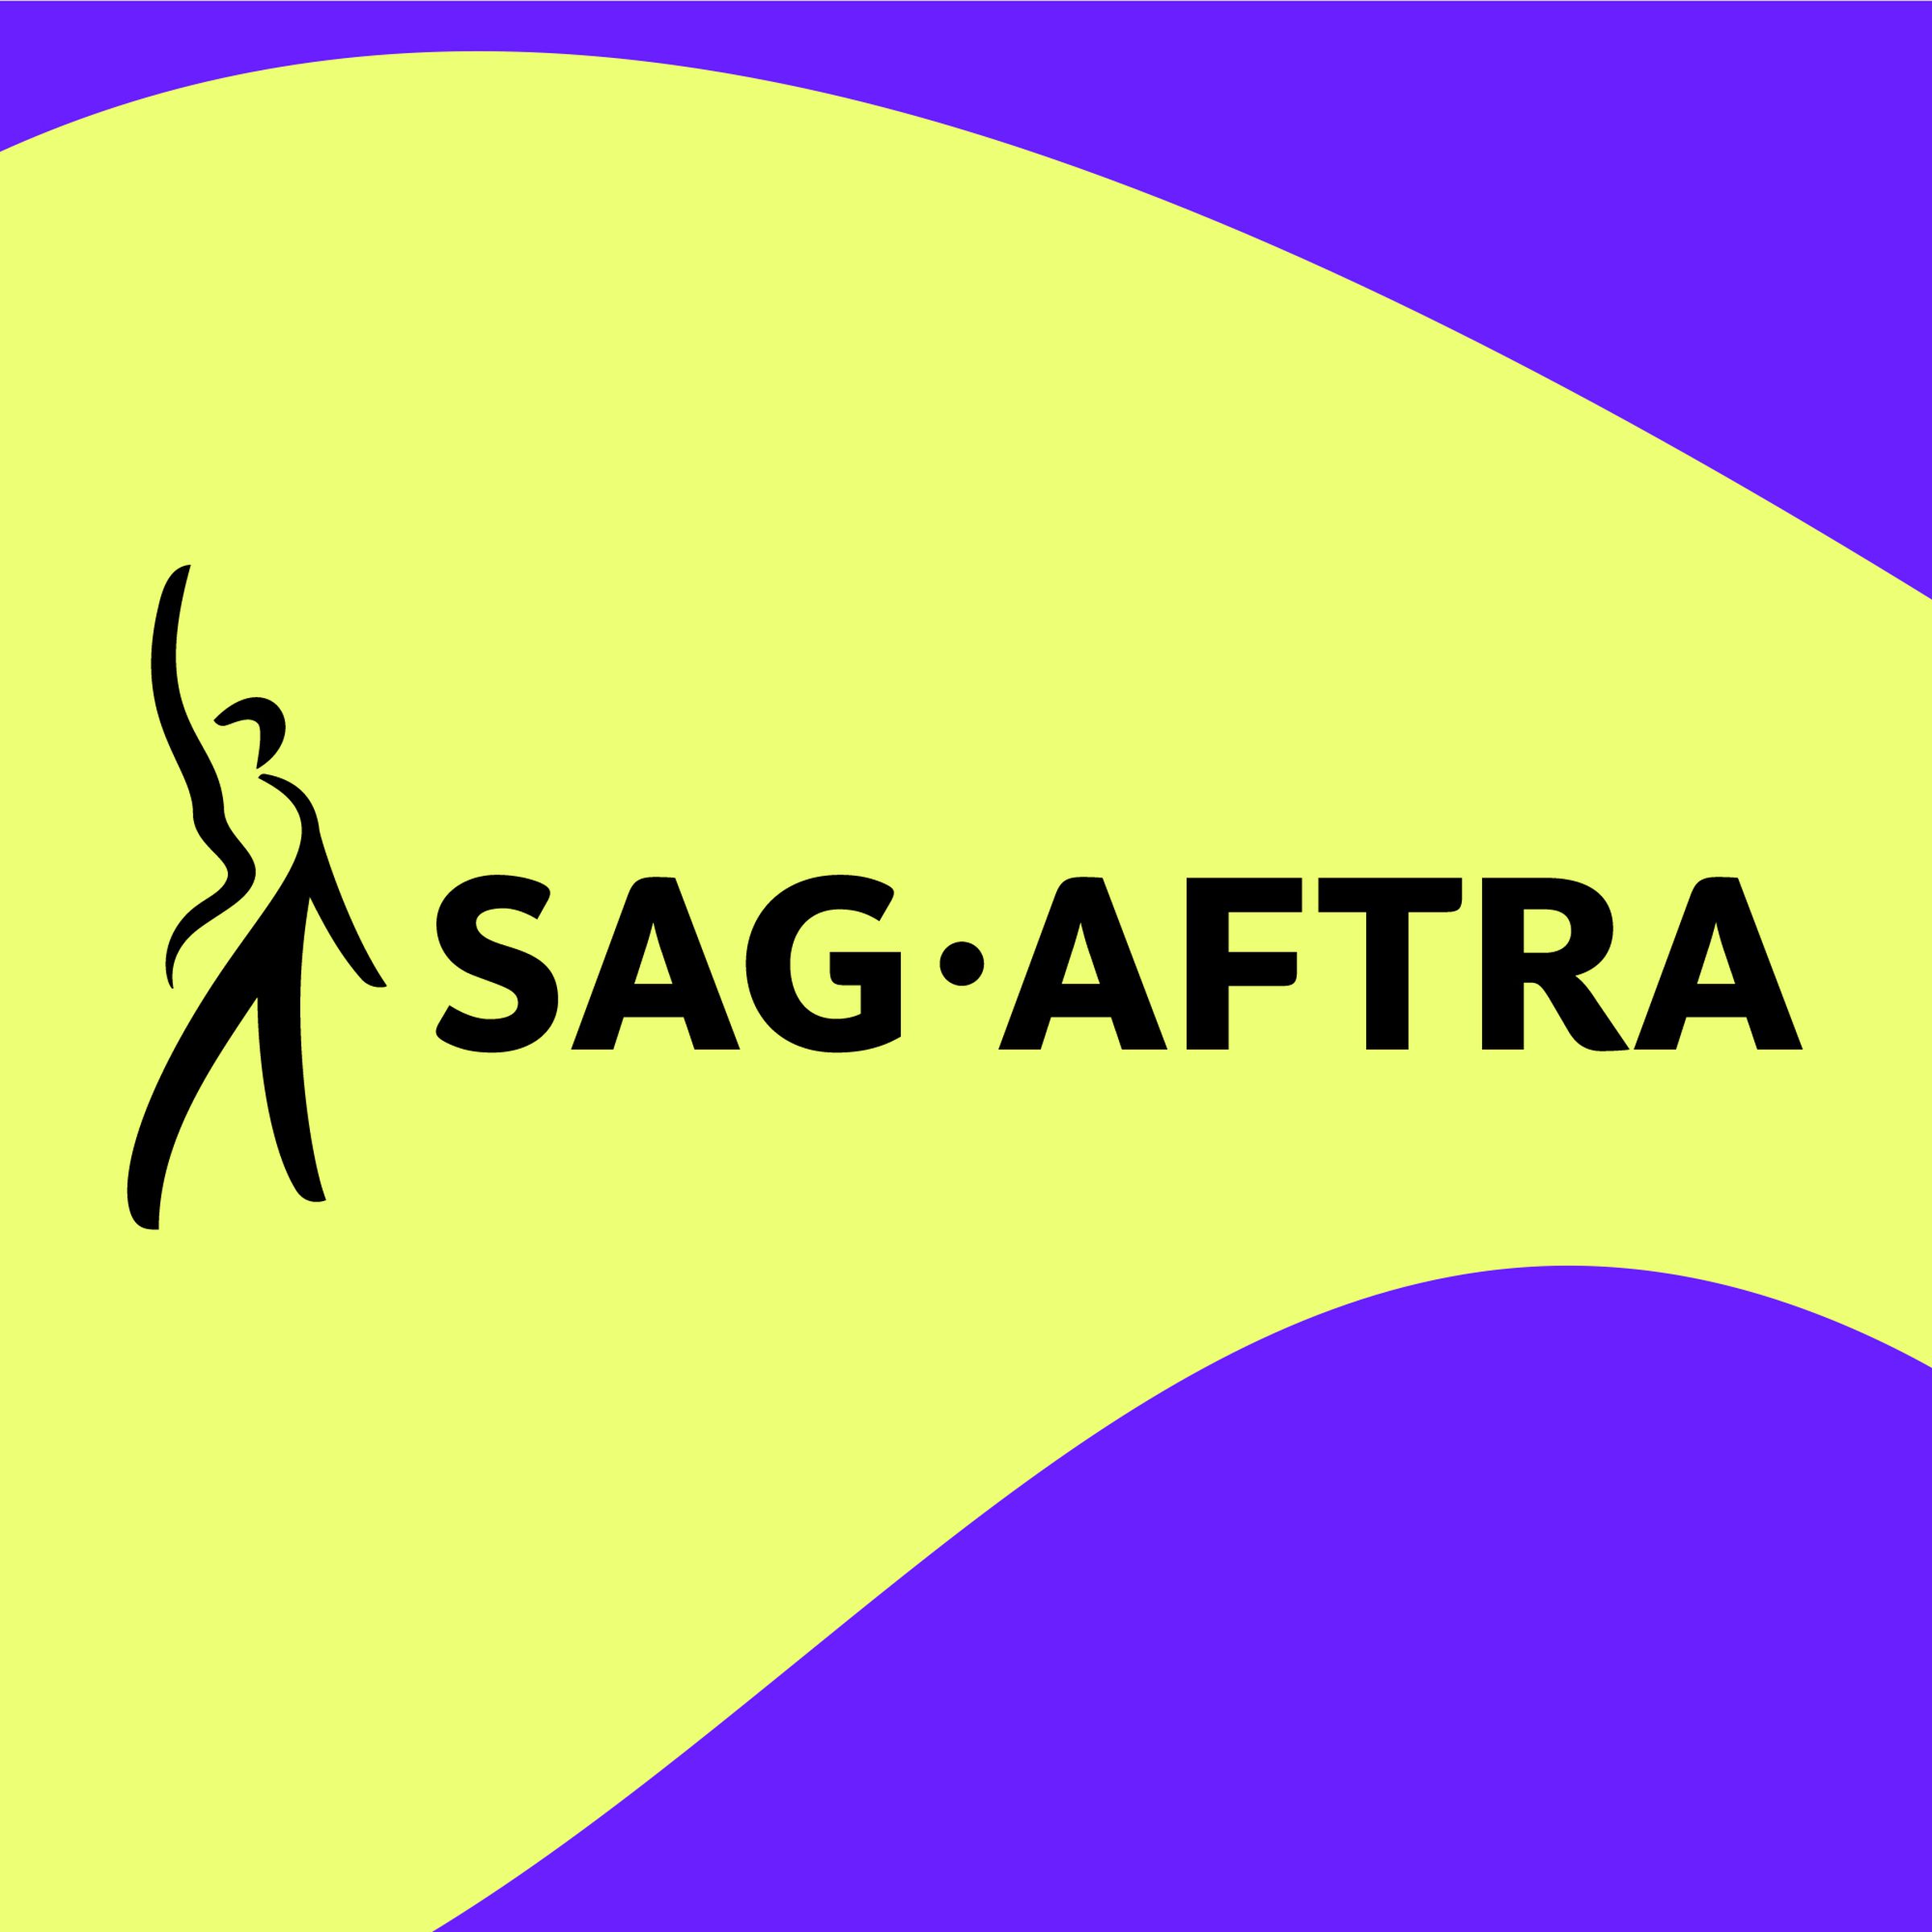 An image showing the SAG-AFTRA logo